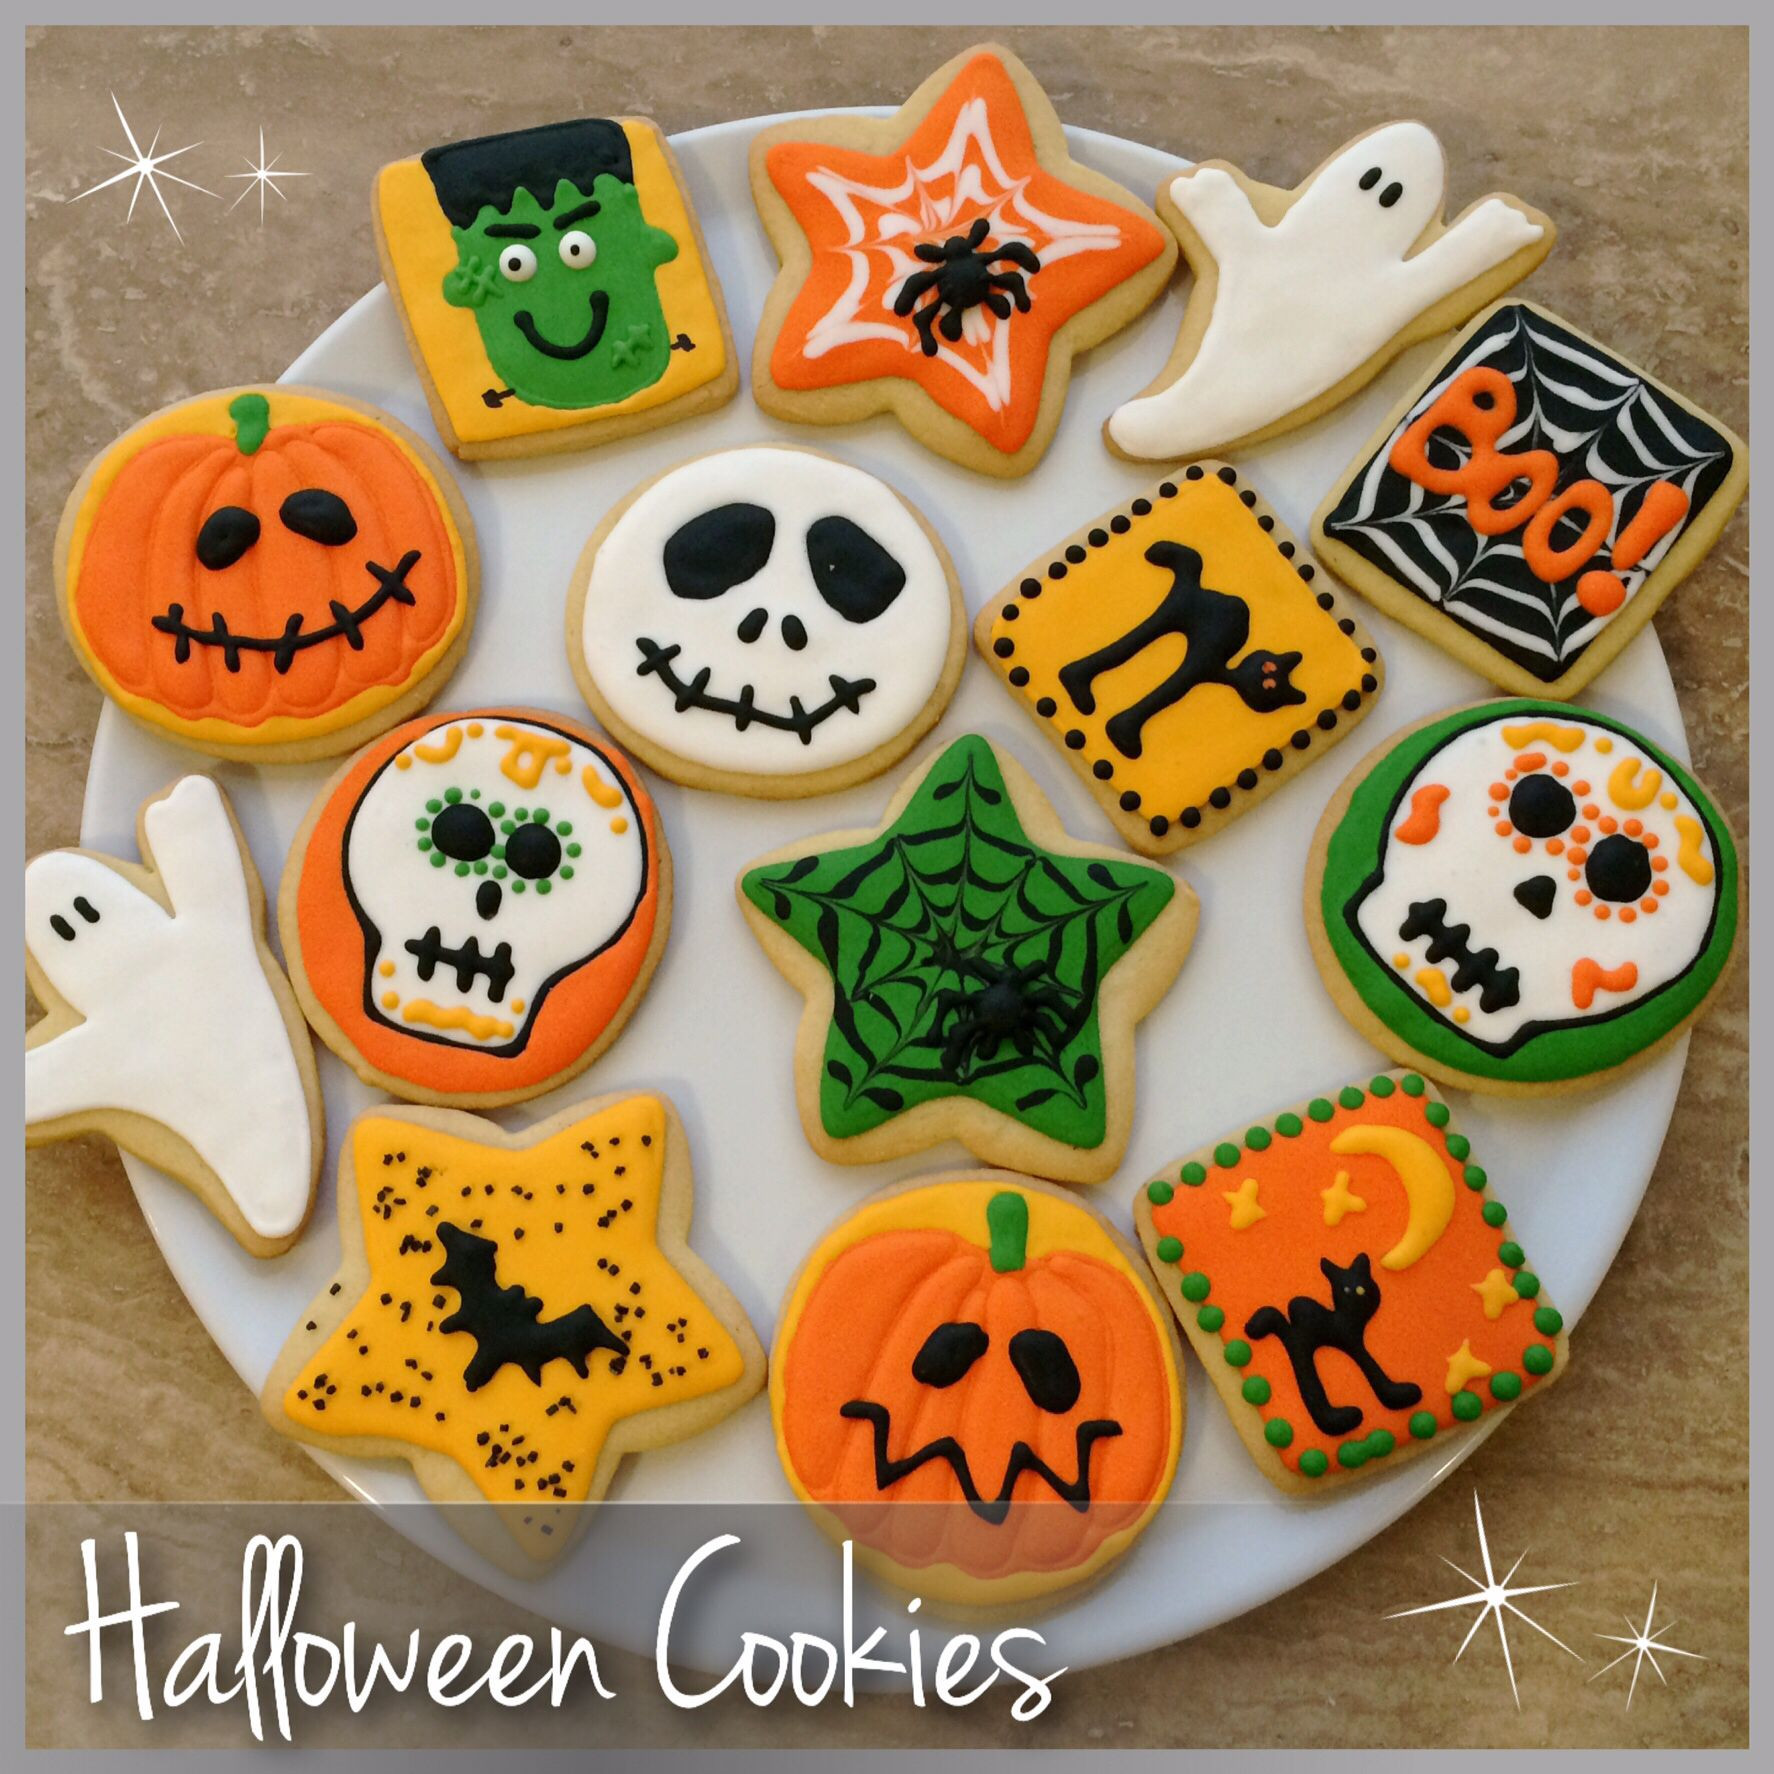 Halloween Cookies Royal Icing
 Royal icing halloween cookies